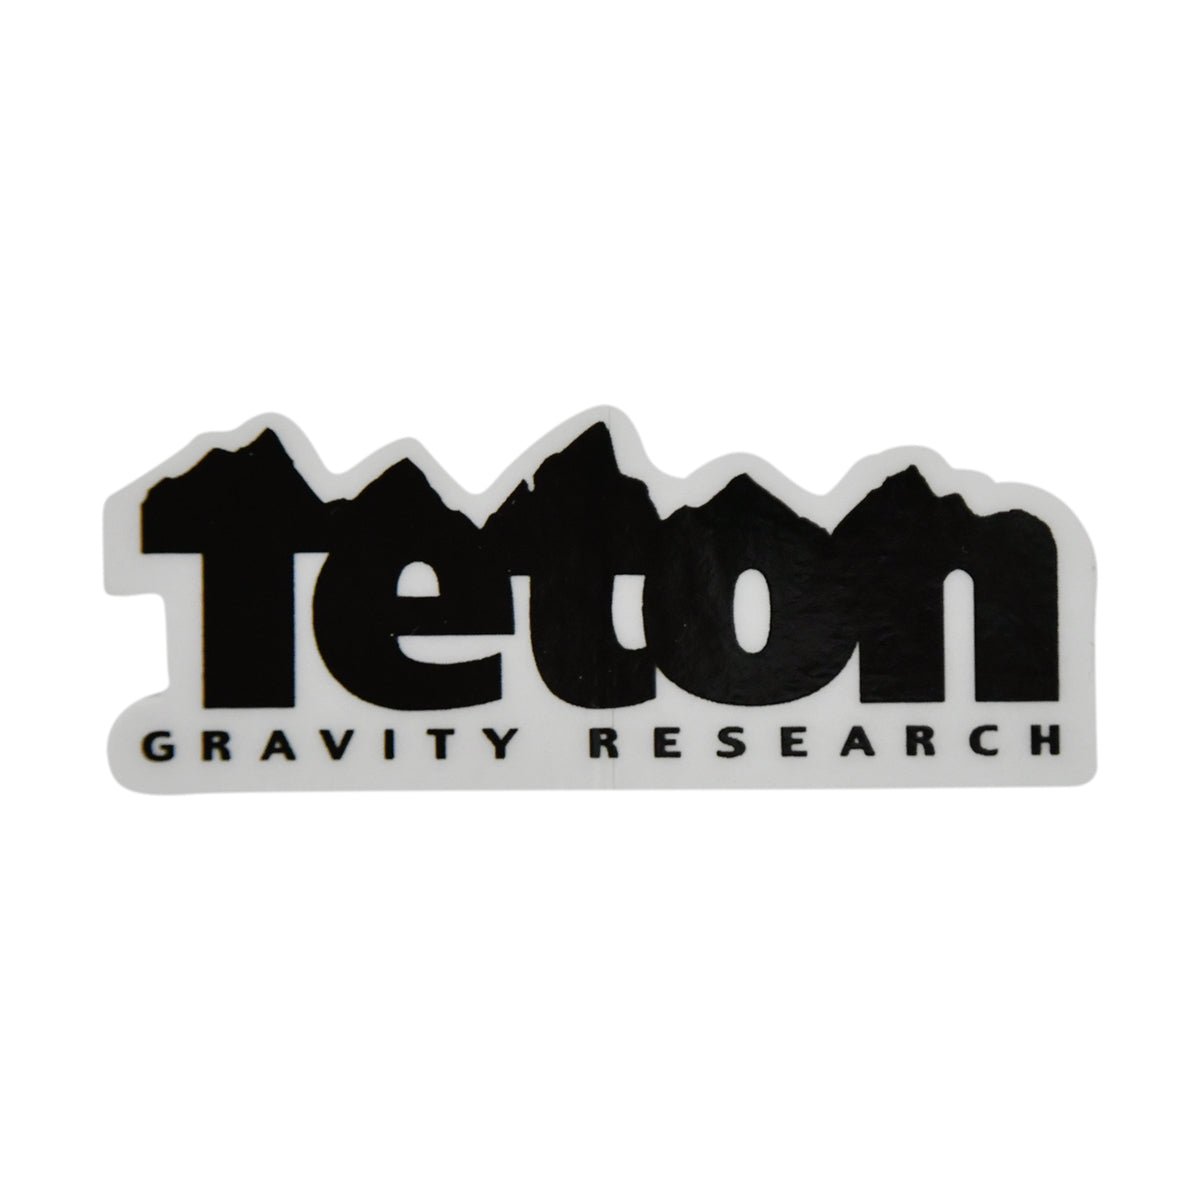 XL Helmet Sticker - Teton Gravity Research